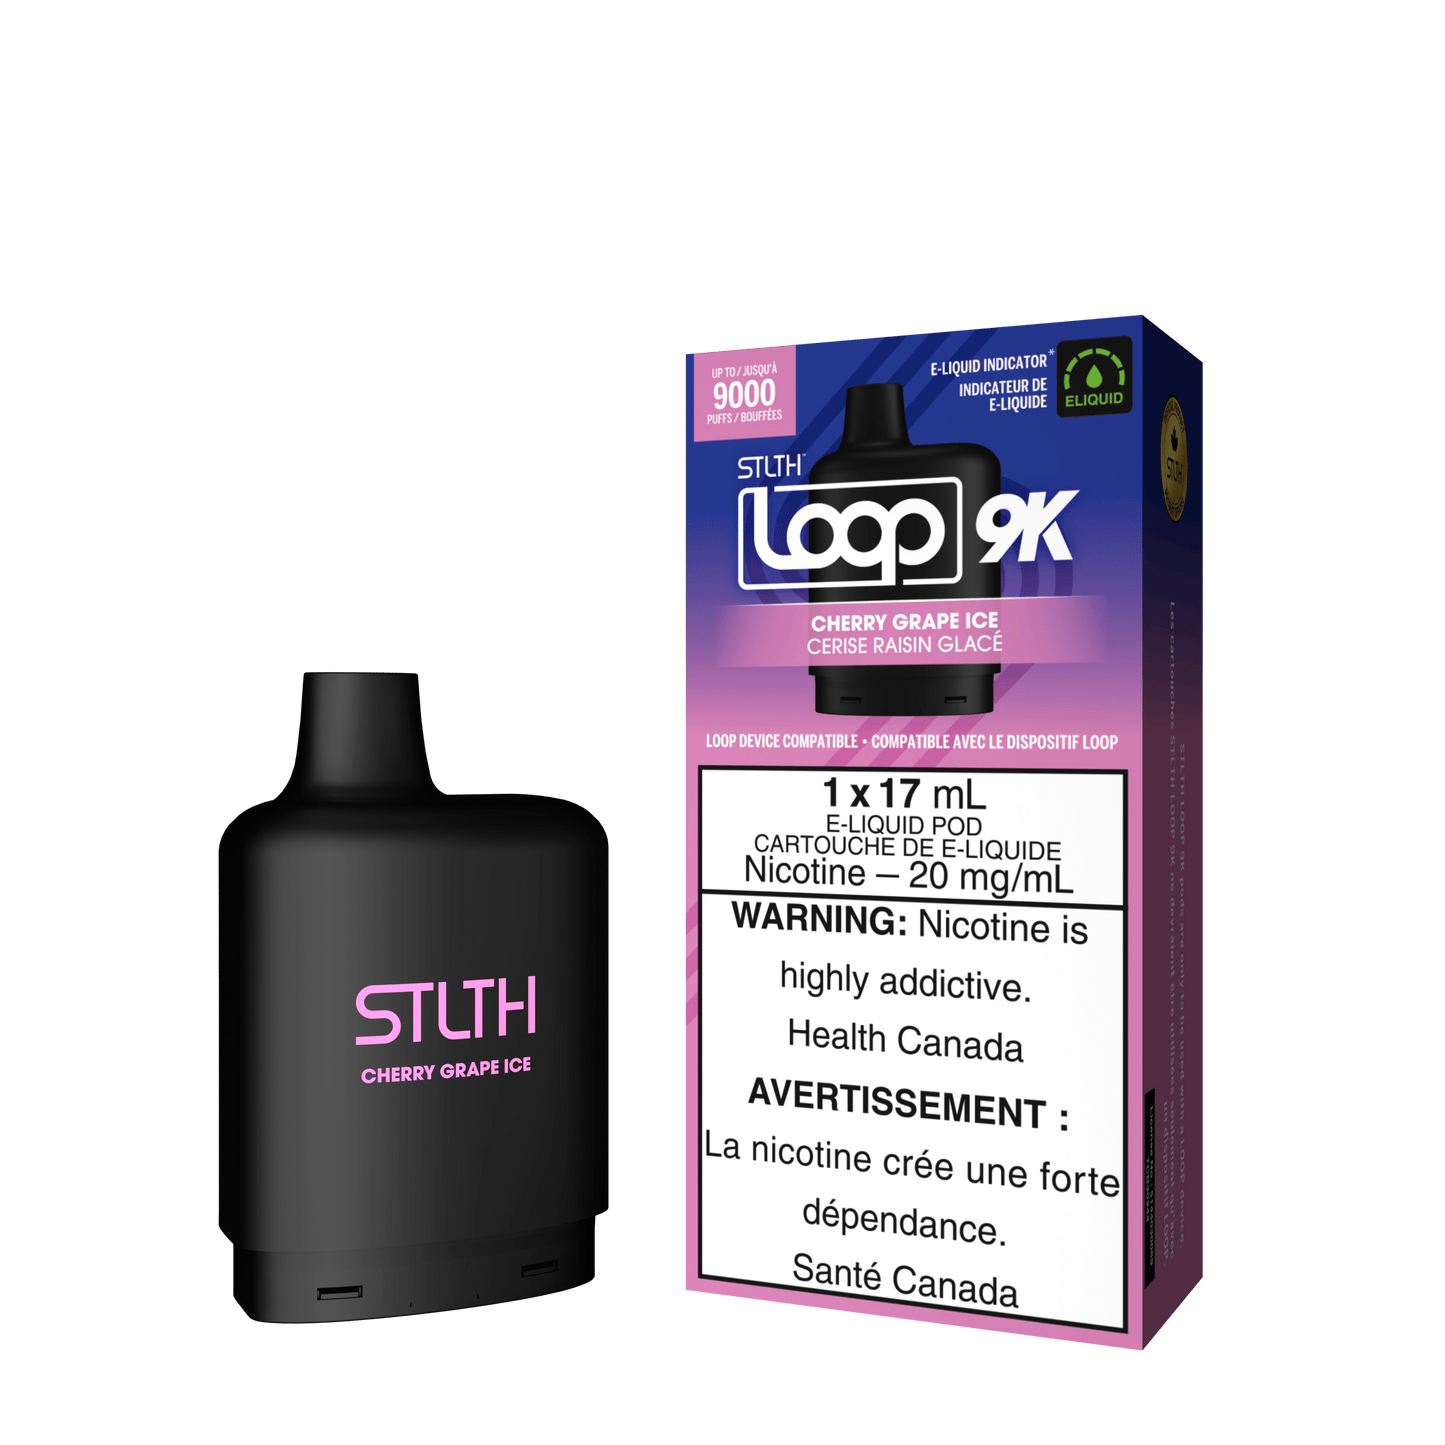 STLTH Loop 9K - Cherry Grape Ice